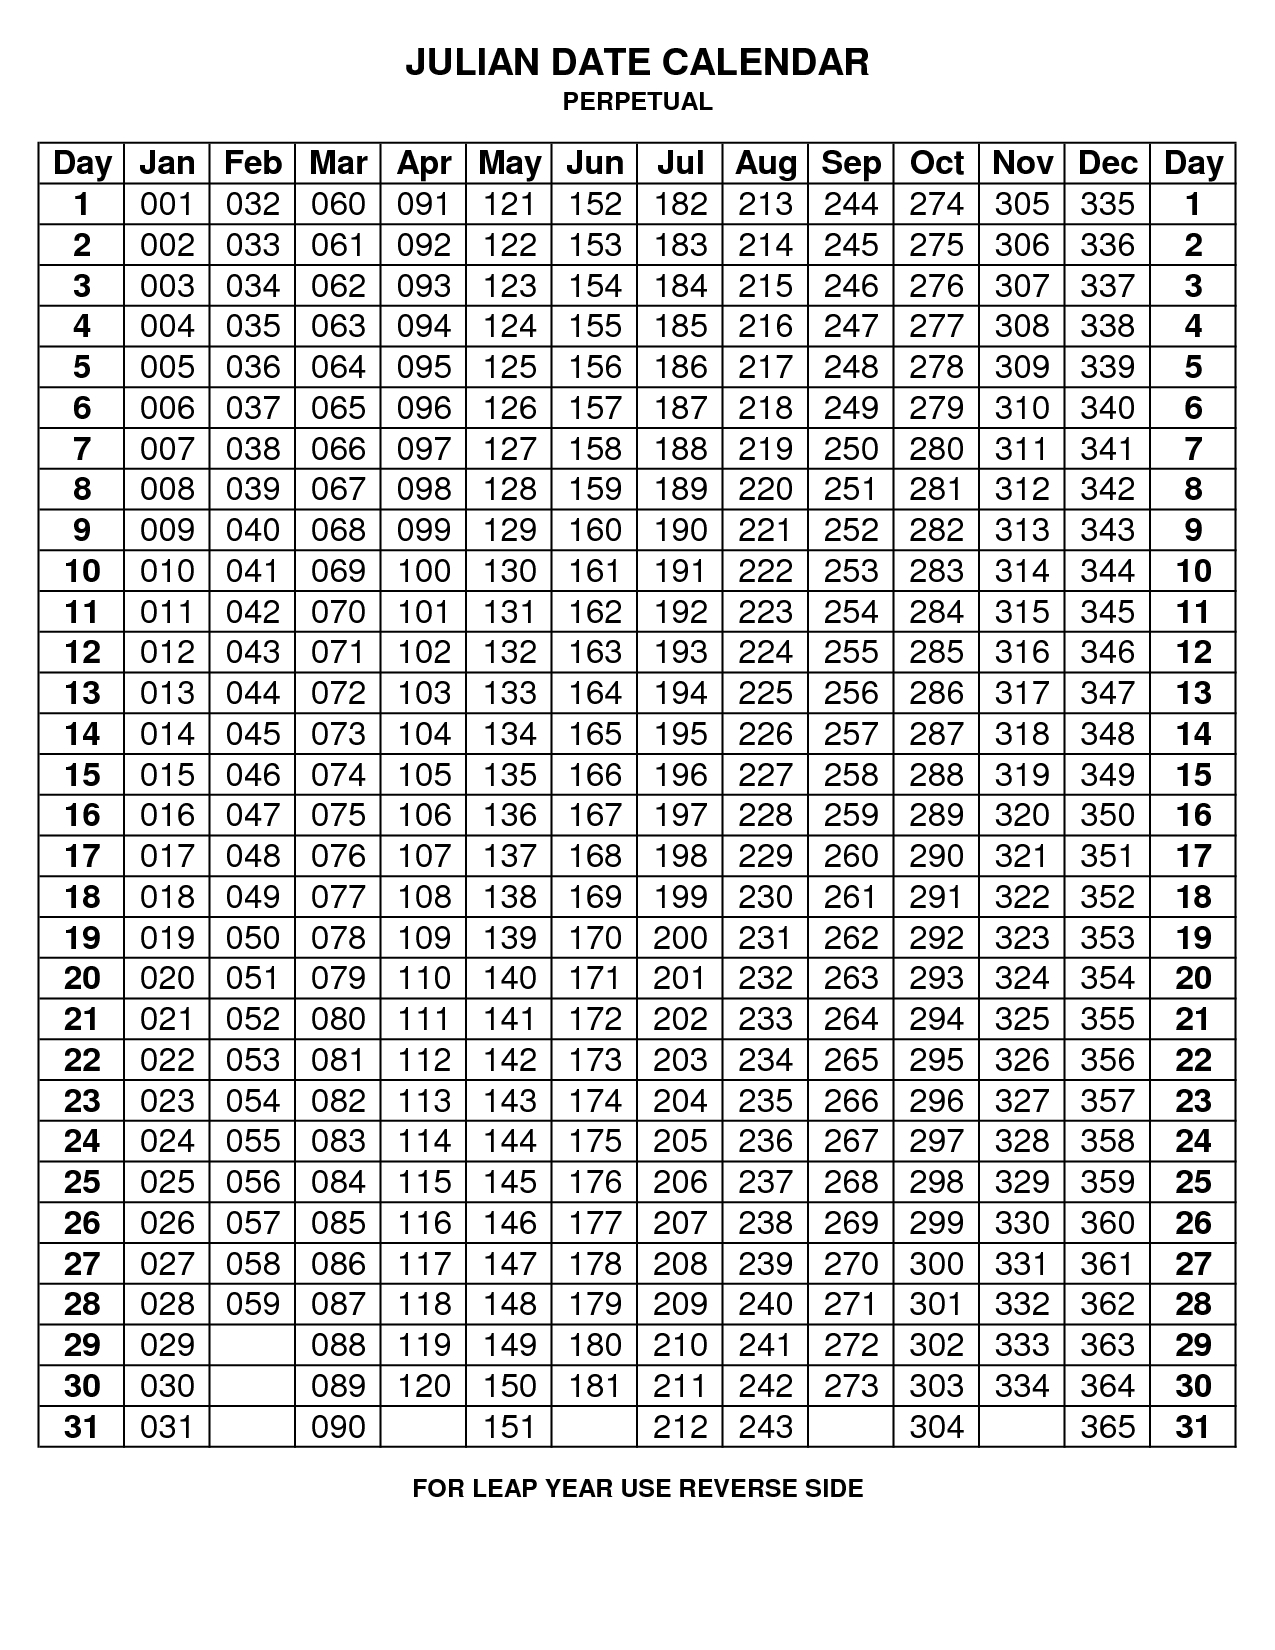 Julian Date Calendar Leap Year Pdf | Calendar For Planning with regard to Julian Date Calendar Pdf